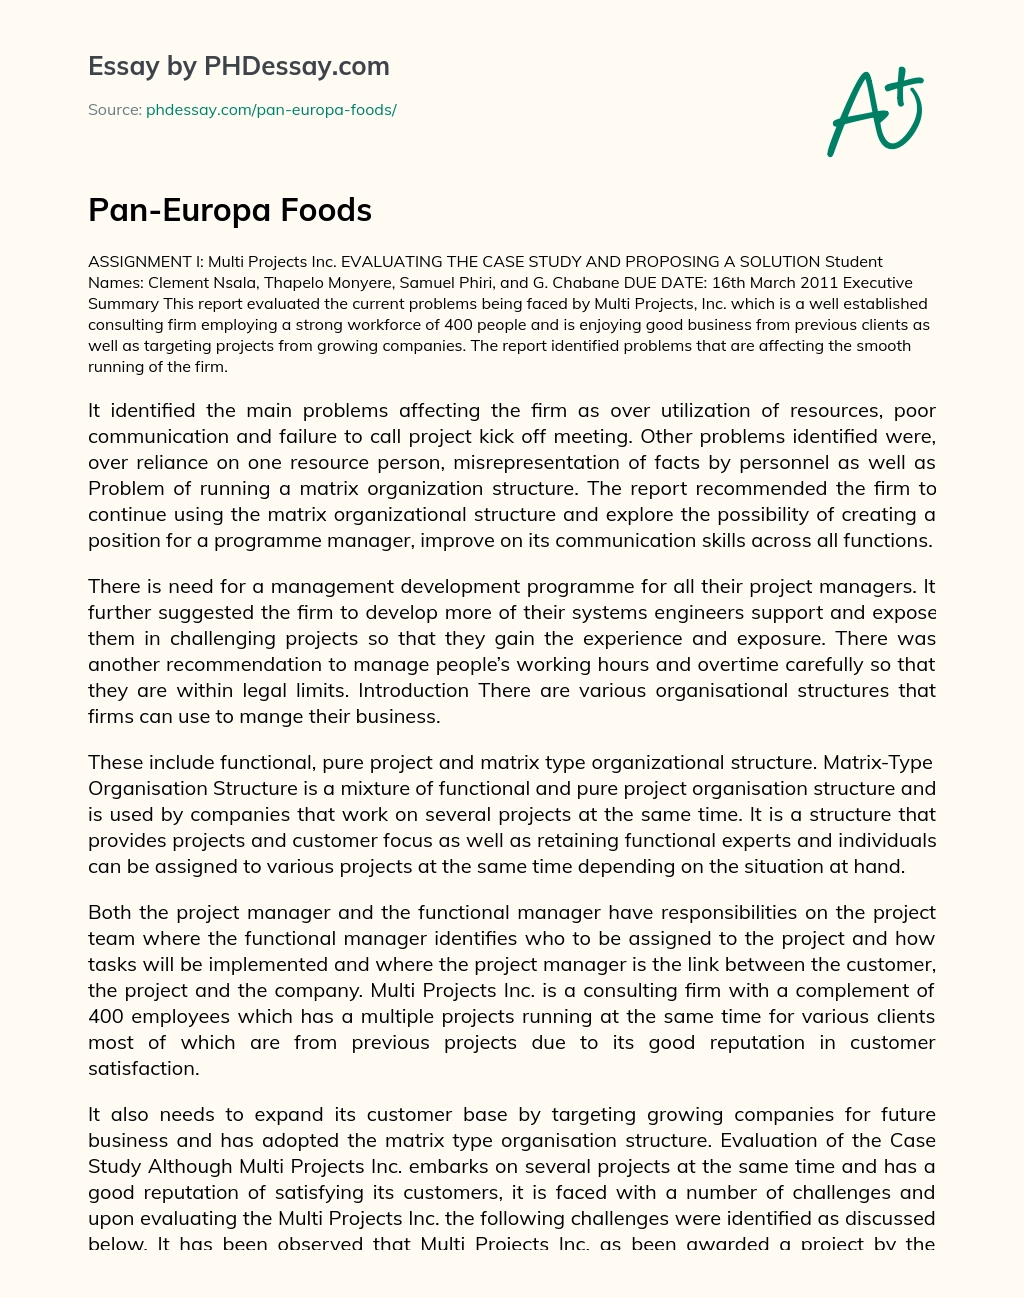 Pan-Europa Foods essay